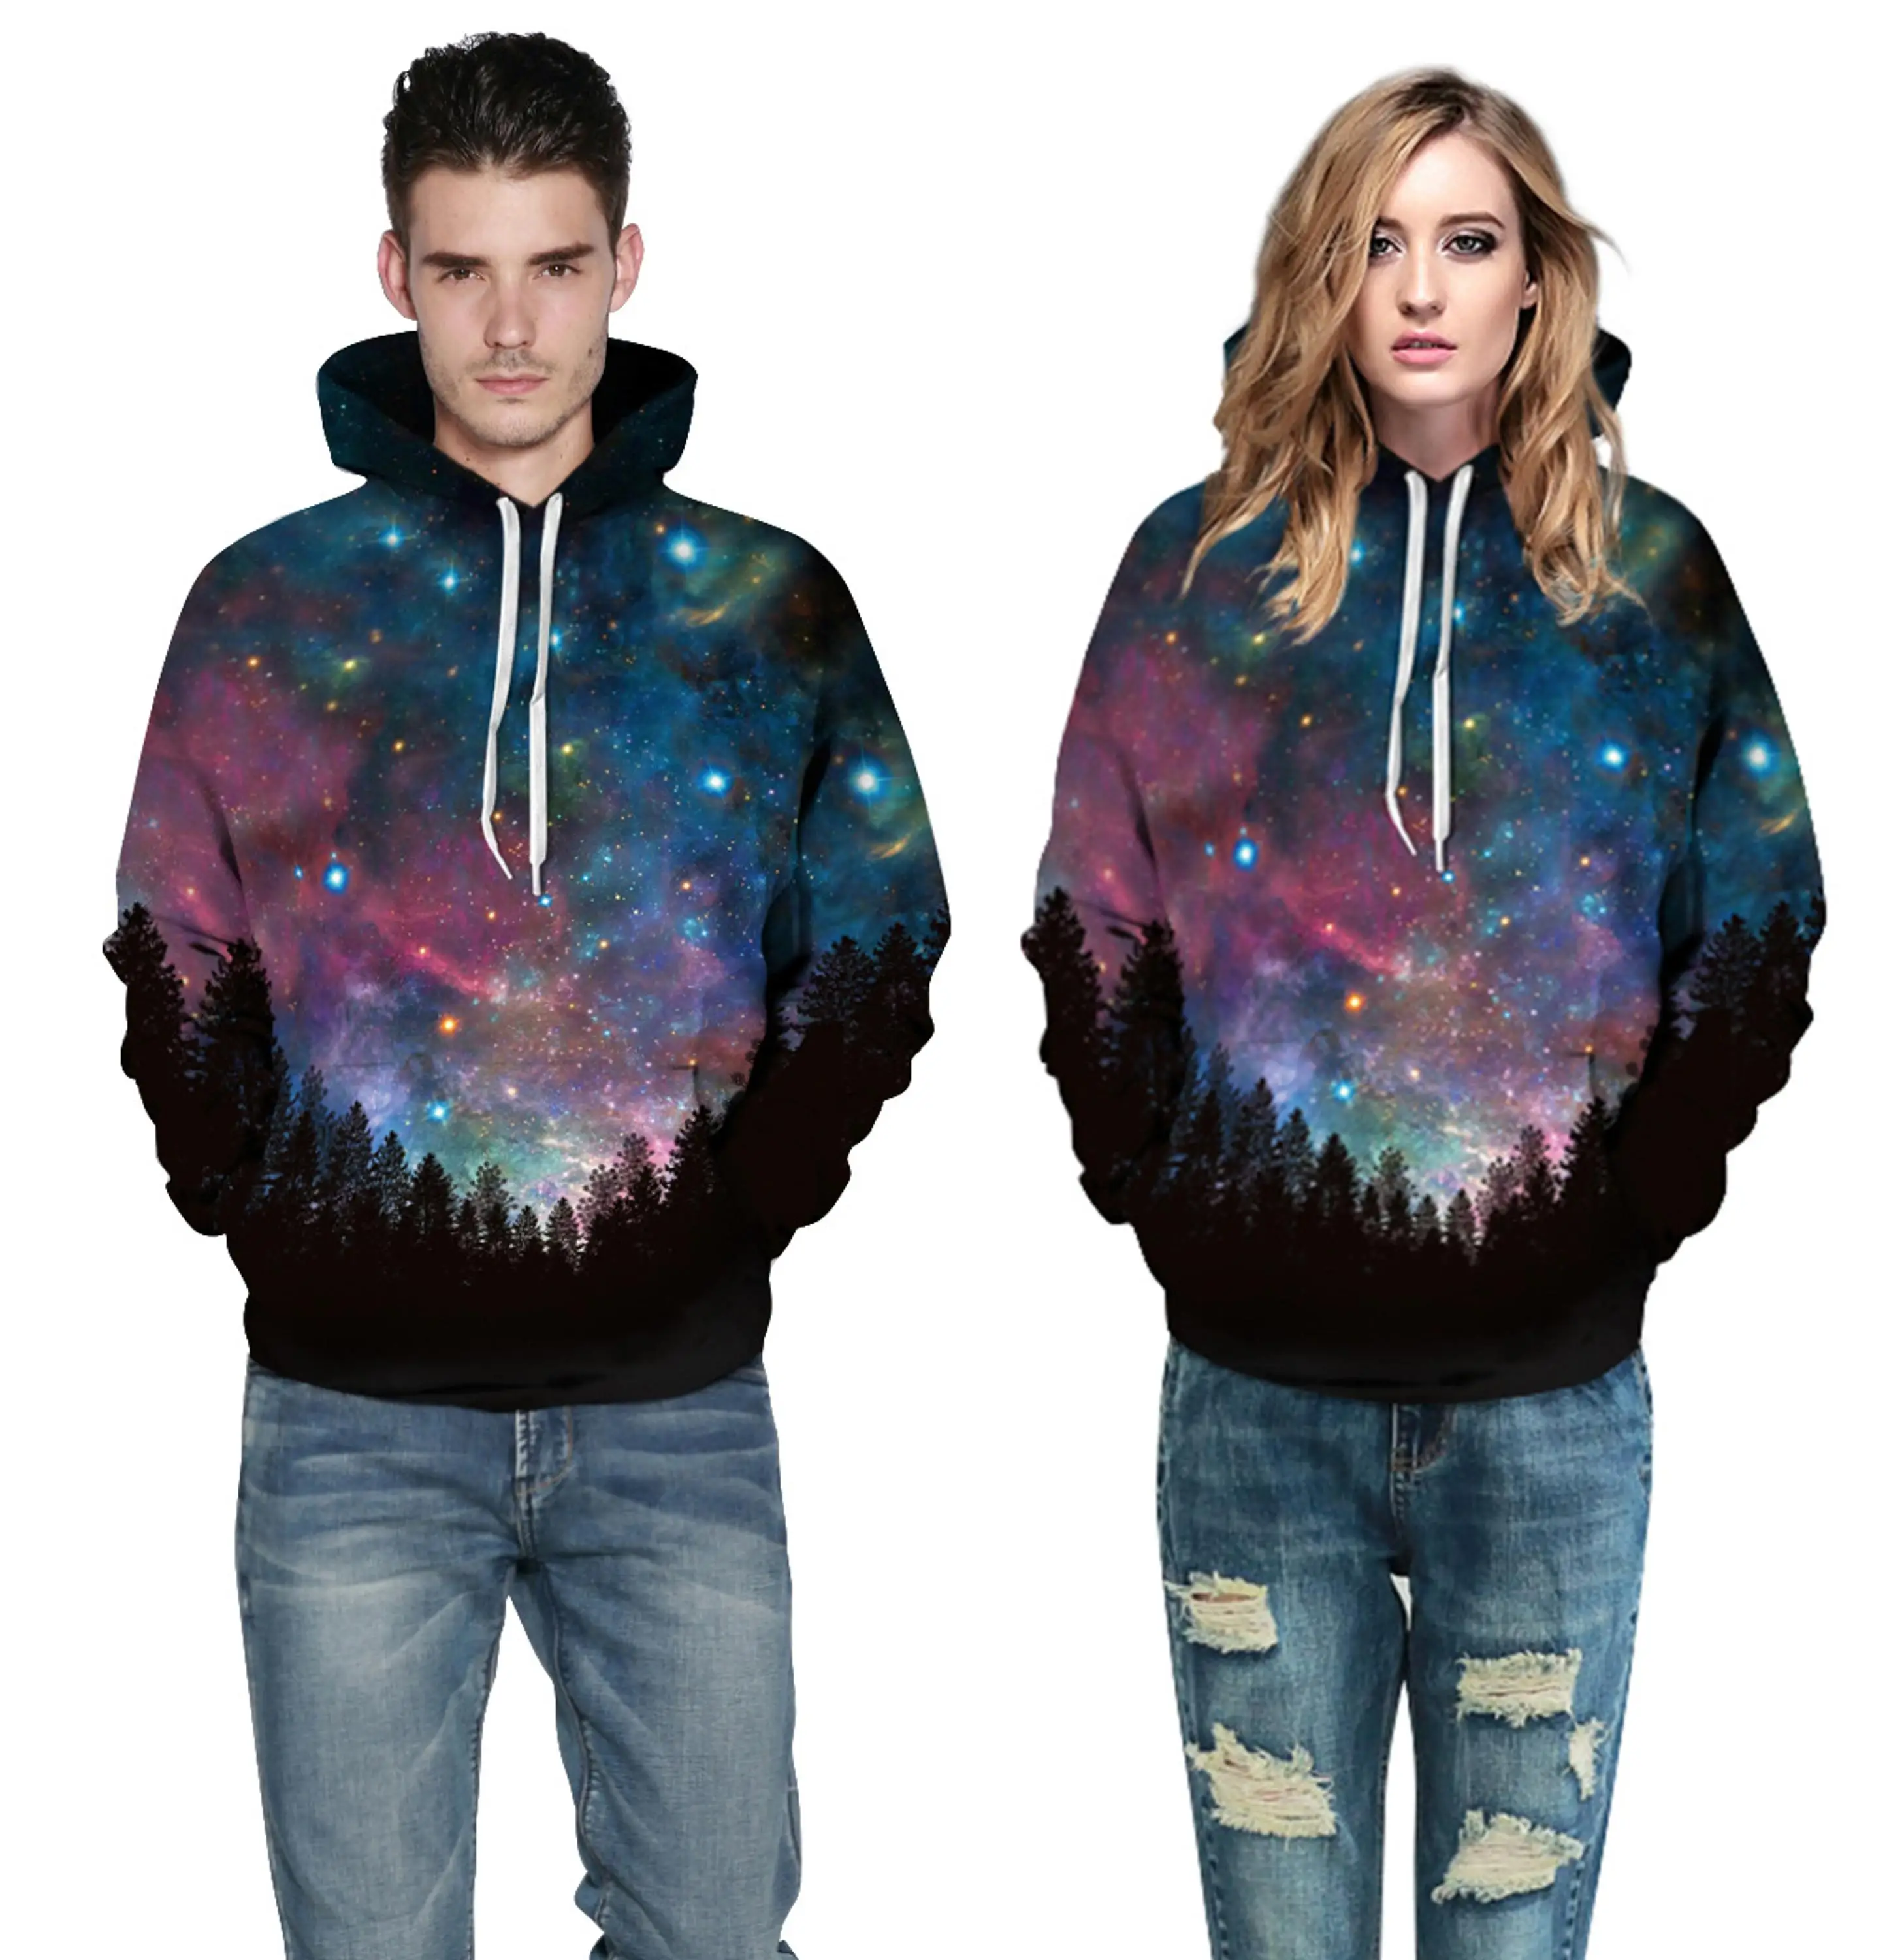 EspTmall Hot Fashion Men/Women 3D Sweatshirts Print Milk Space Galaxy Hooded Hoodies Unisex Tops Picture Color M 